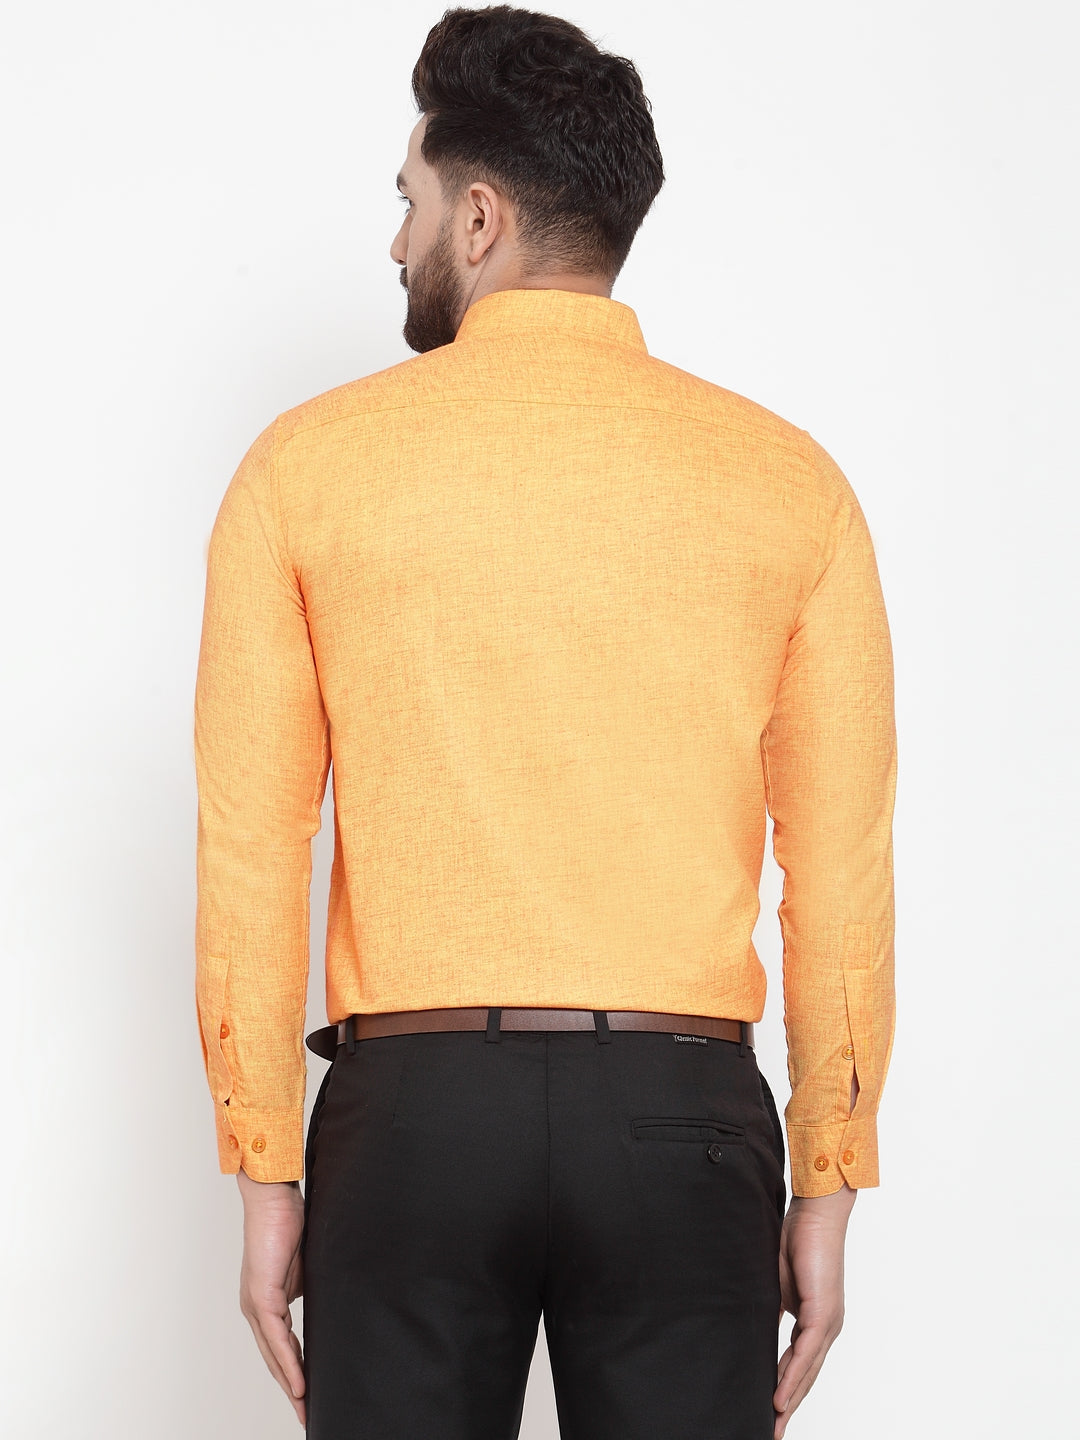 Men's Yellow Cotton Solid Button Down Formal Shirts ( SF 753Yellow ) - Jainish